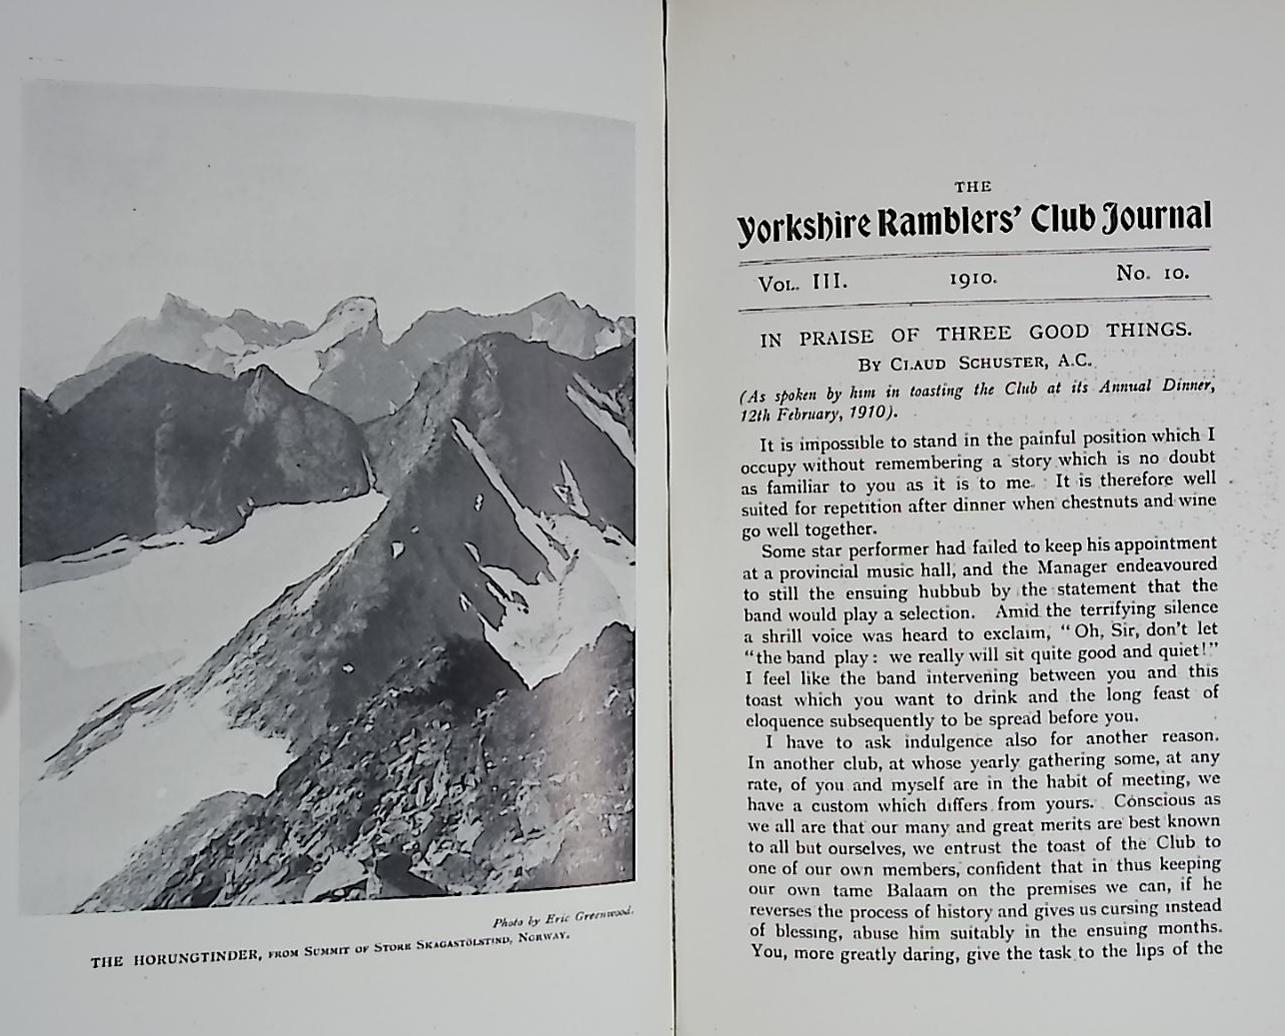 The Yorkshire Ramblers' Club Journal. Volume III. 1909 to 1912.